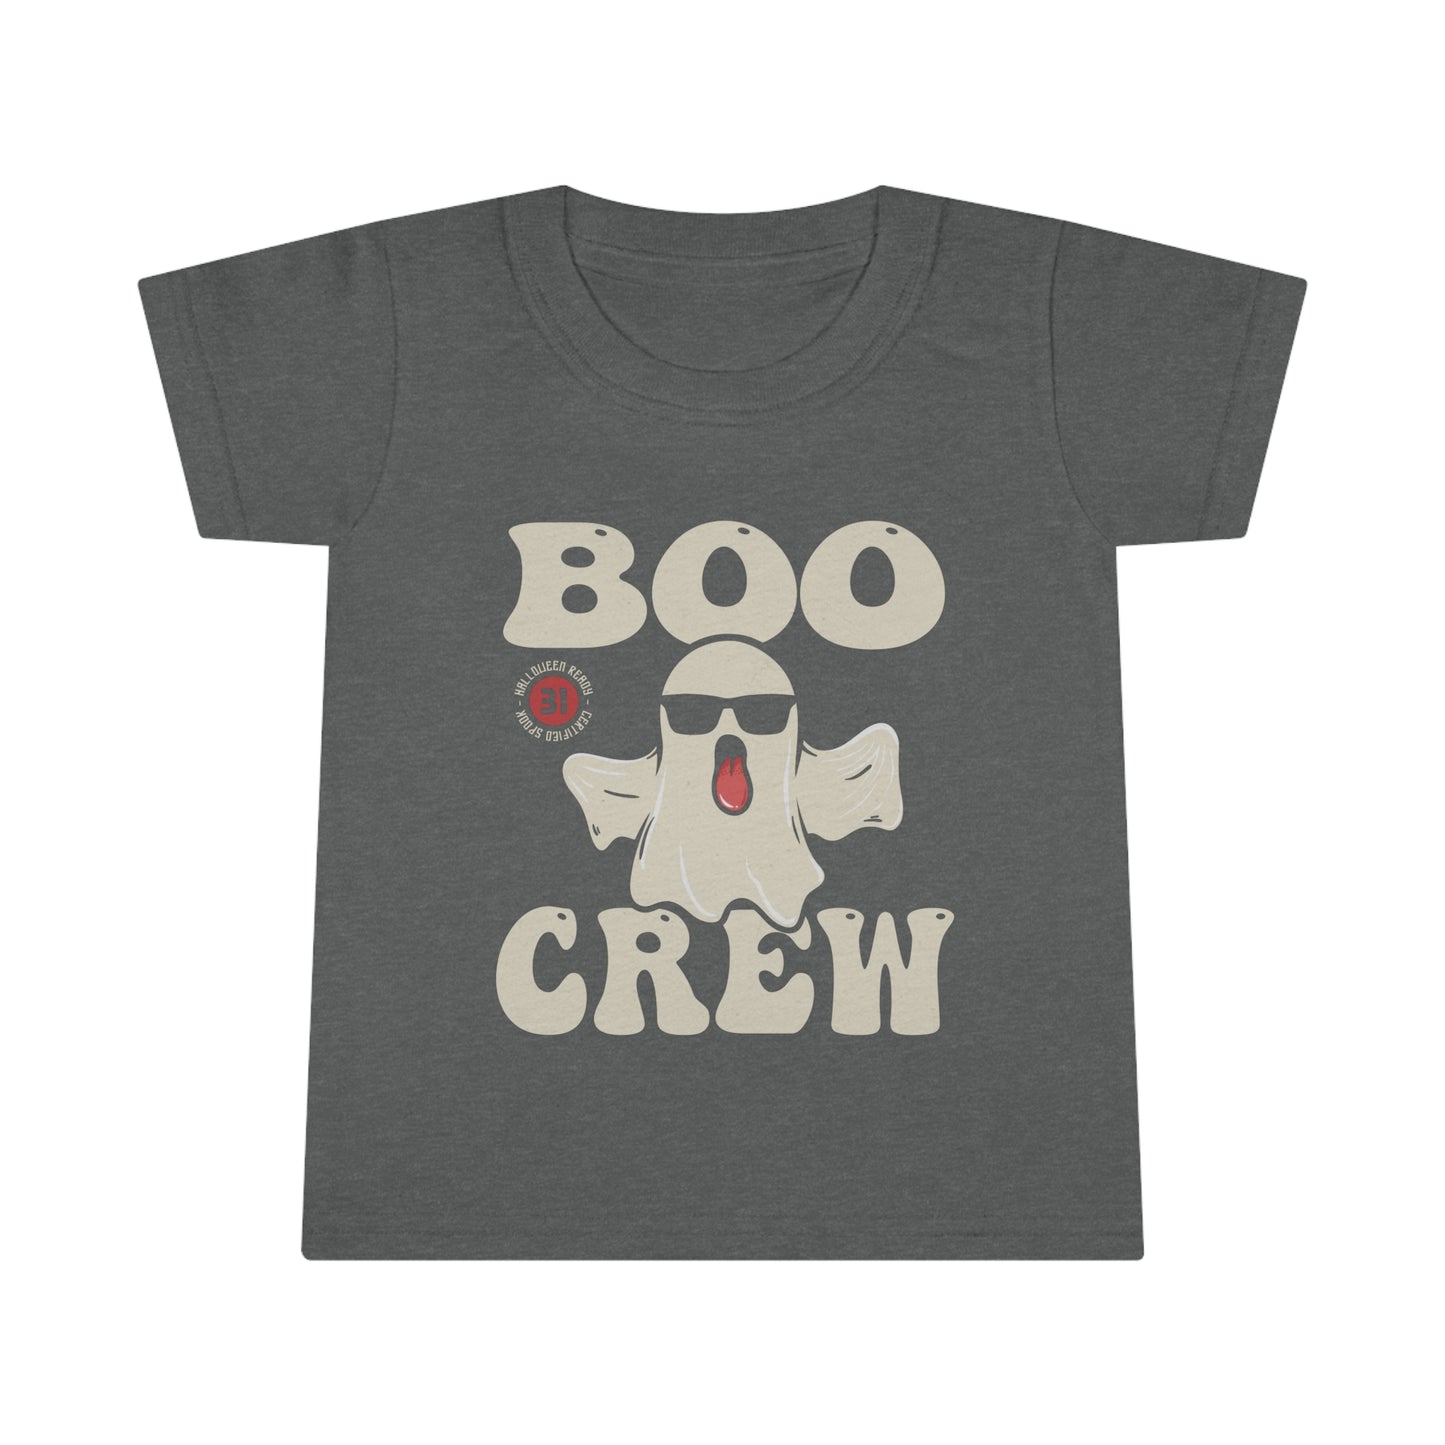 The Boo Crew Halloween Toddler T-shirt